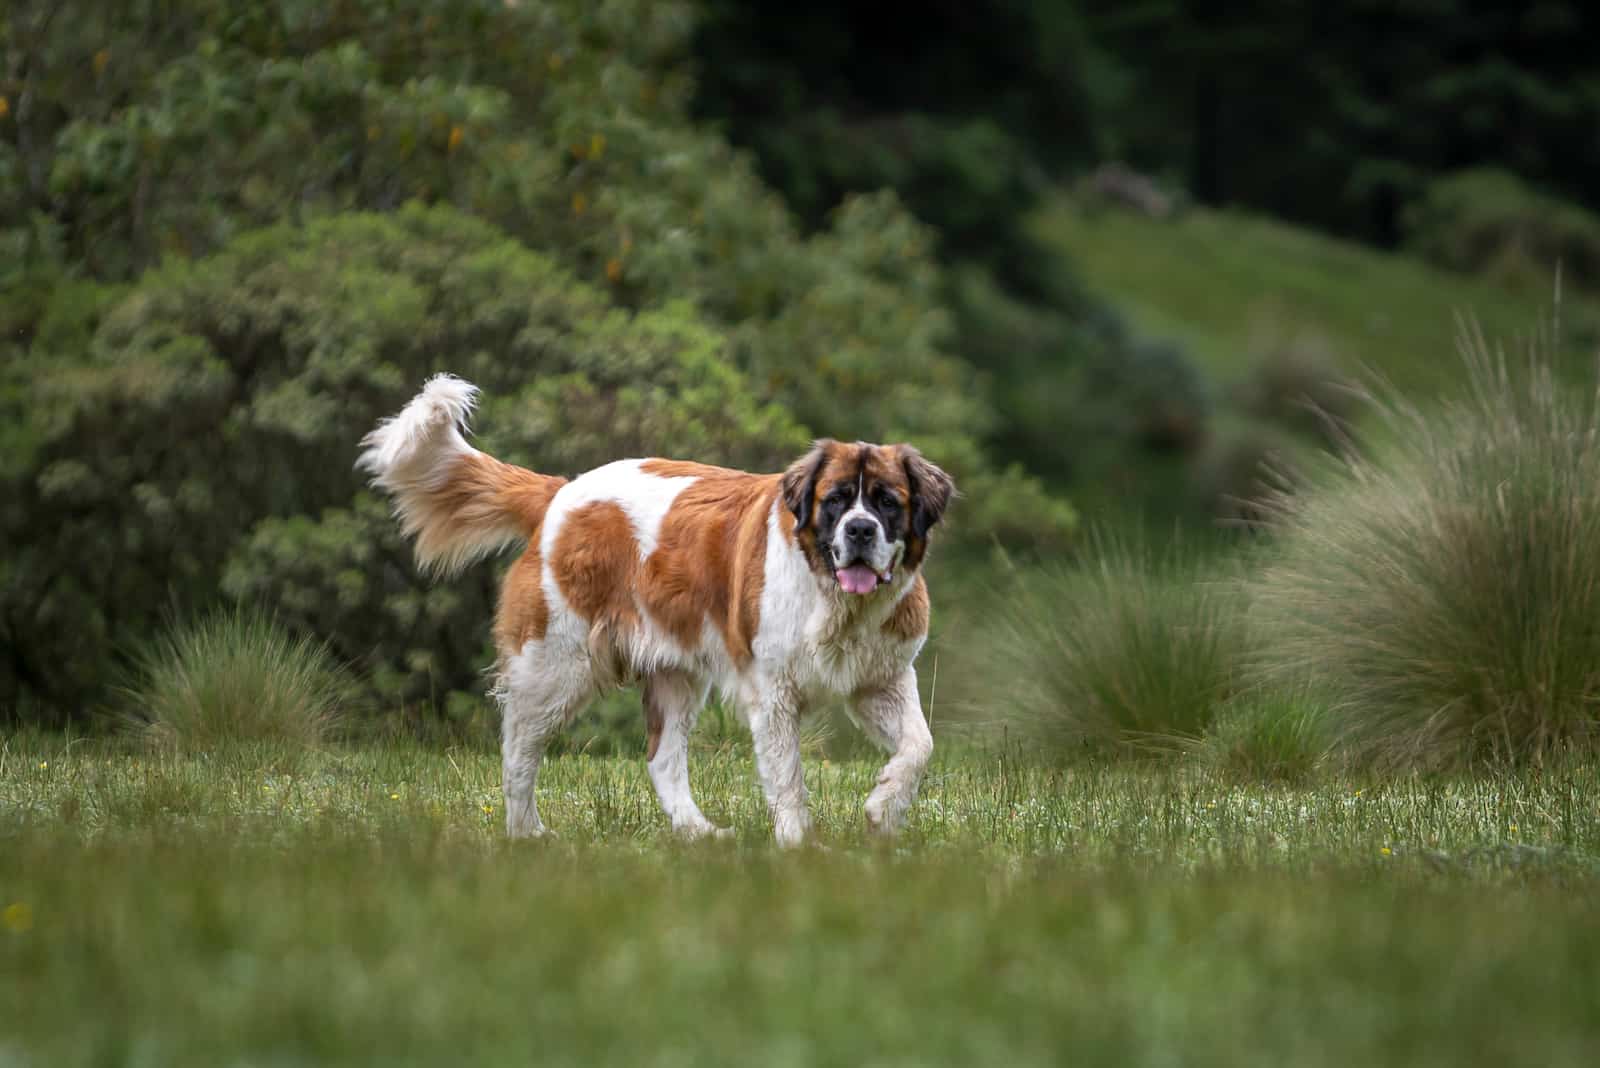 saint bernard purebred dog with nature vegetation behind